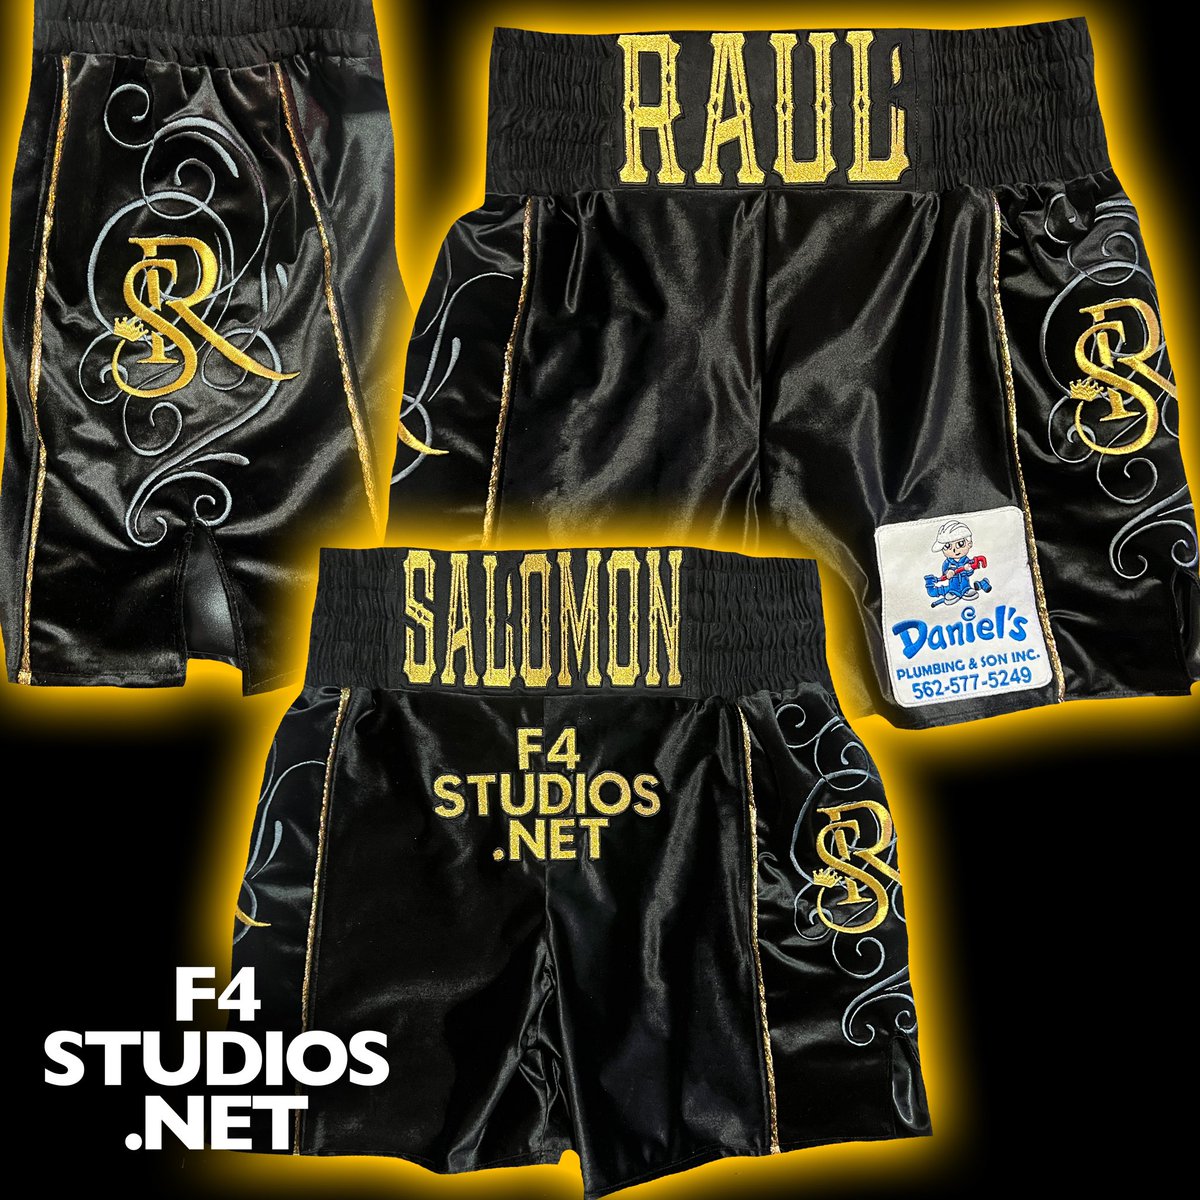 Custom Velvet Suit for Raul Salomon  @raulsalomonjr #F4STUDIOS  #customboxingoutfits #boxingoutfits #boxingoutfit #boxingkit #customboxingkits  #boxinguniforms #boxingtrunks  #boxingshorts #boxing  #boxeo #boxinggear #customboxinguniforms #ringattire #raulsalomon #raulsalomonjr